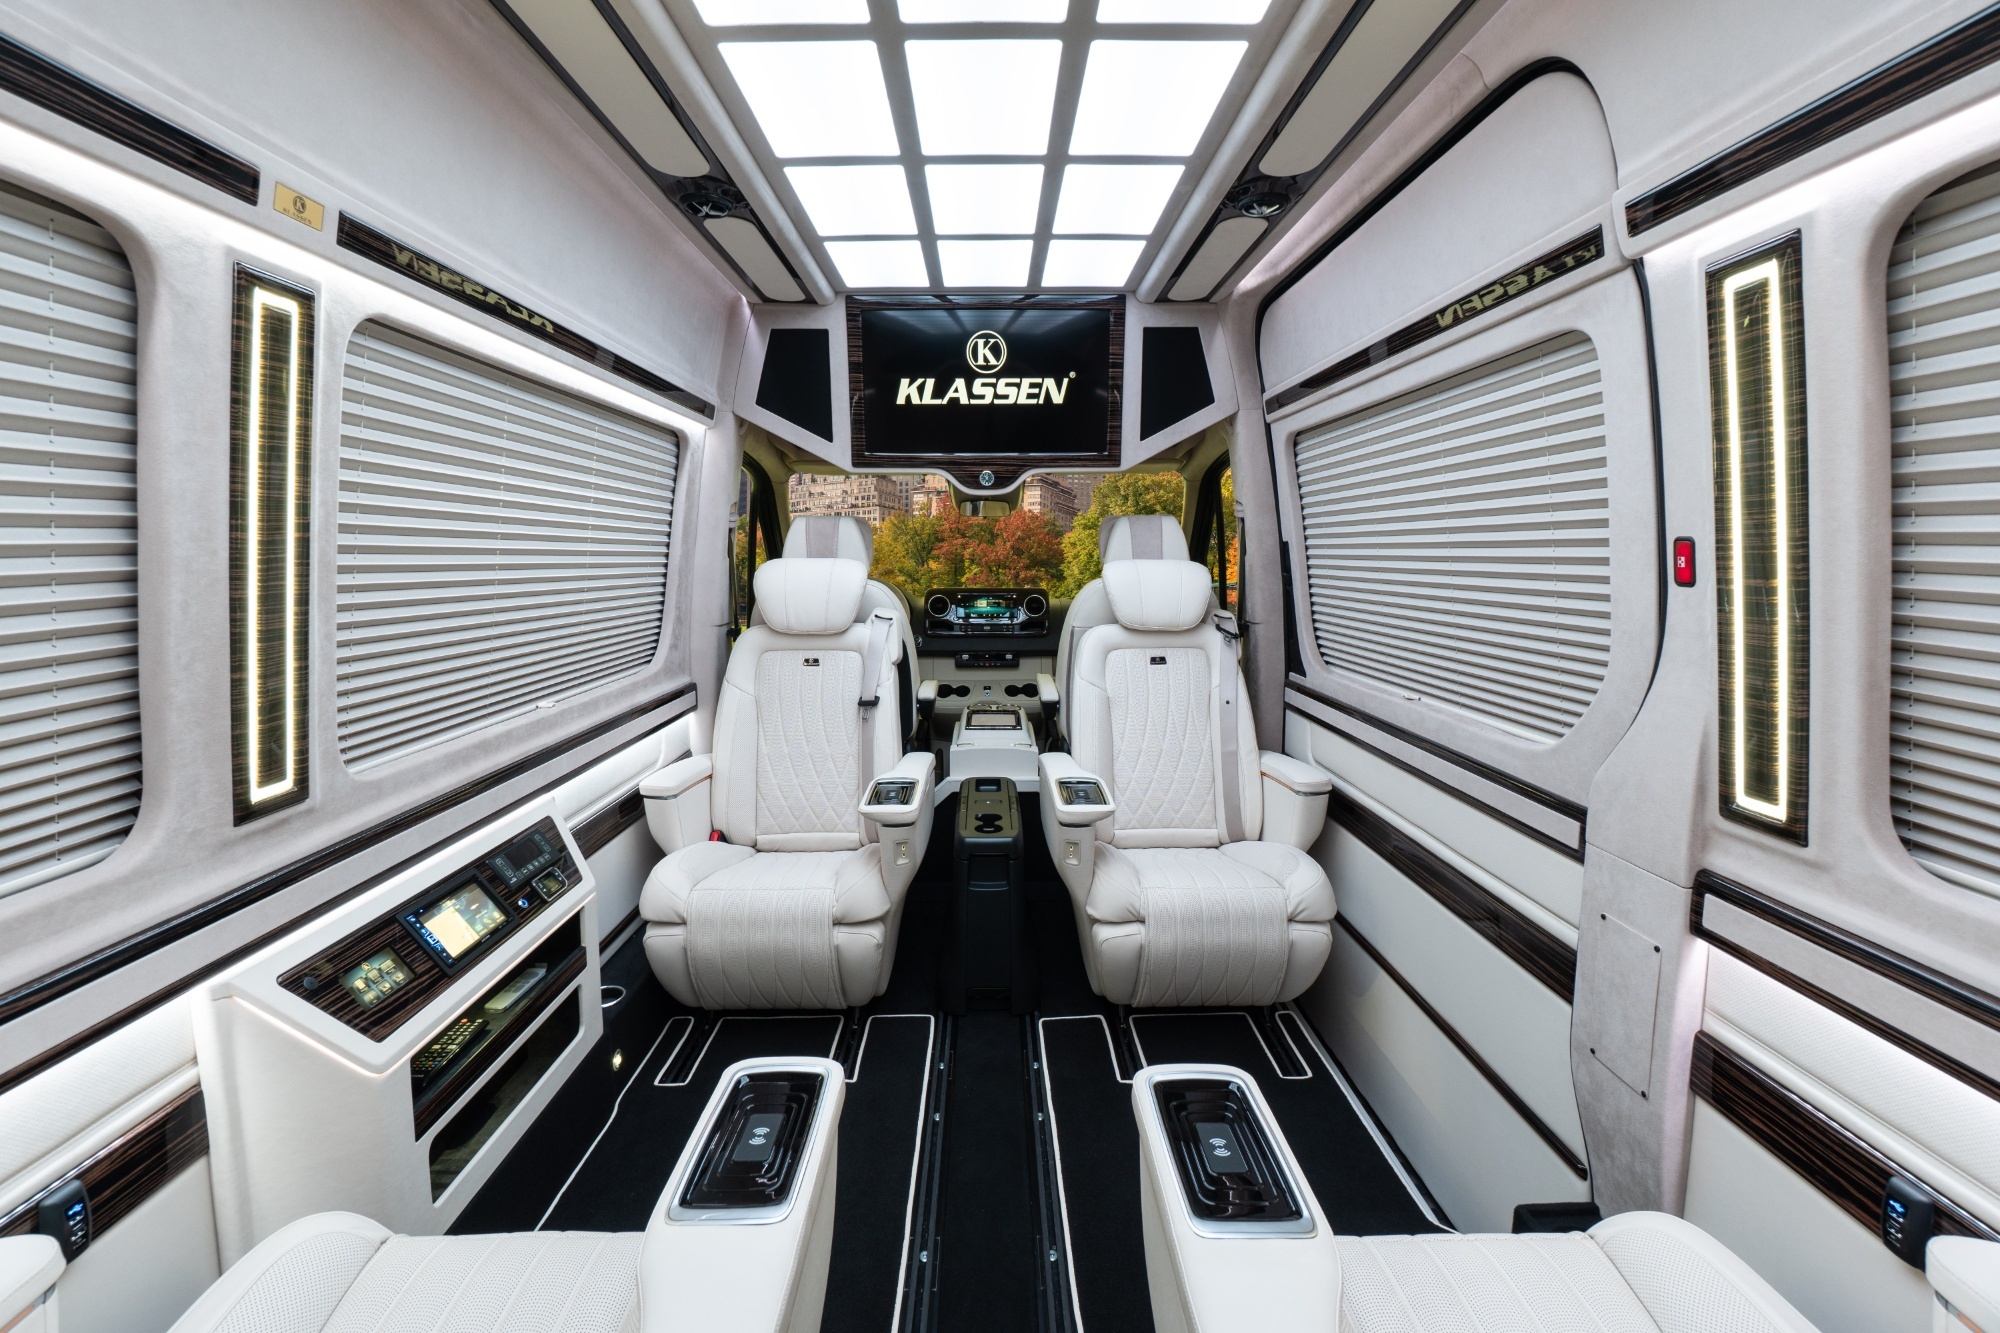 2022 Mercedes Sprinter VIP KING VAN - NEW Full Review Interior Exterior -  Luxury First Class - KLASSEN